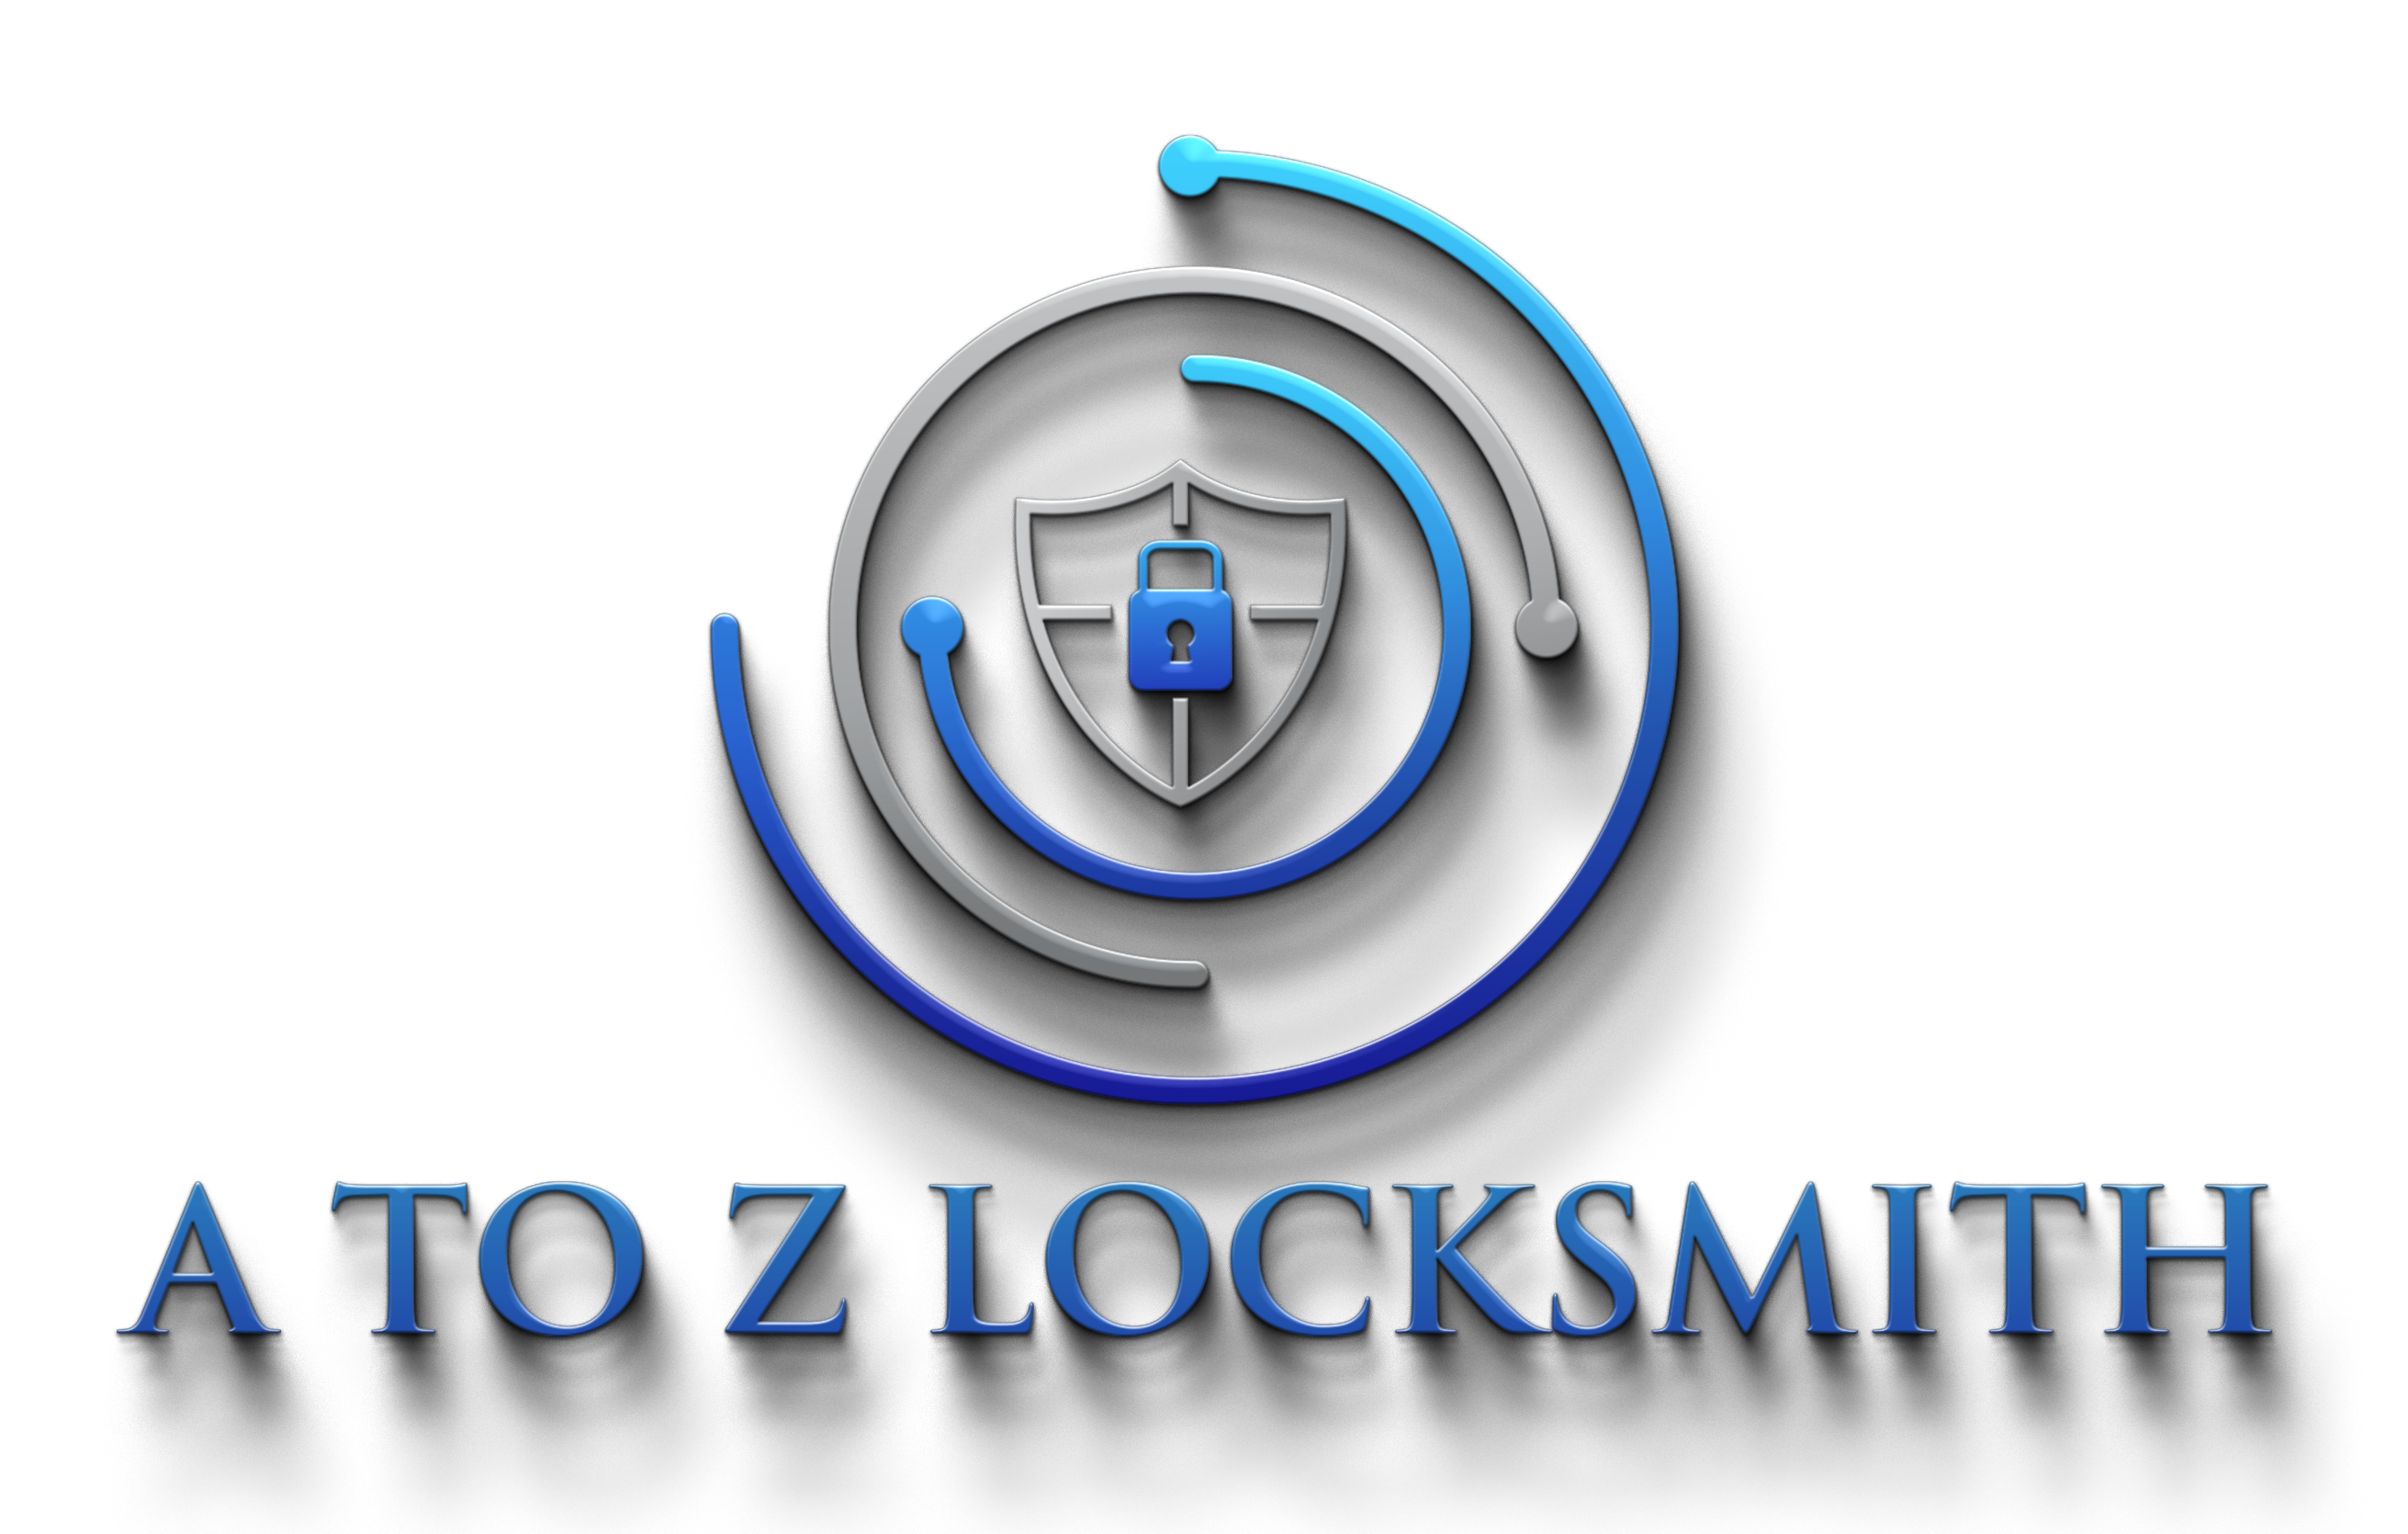 A To Z Locksmith Services's logo